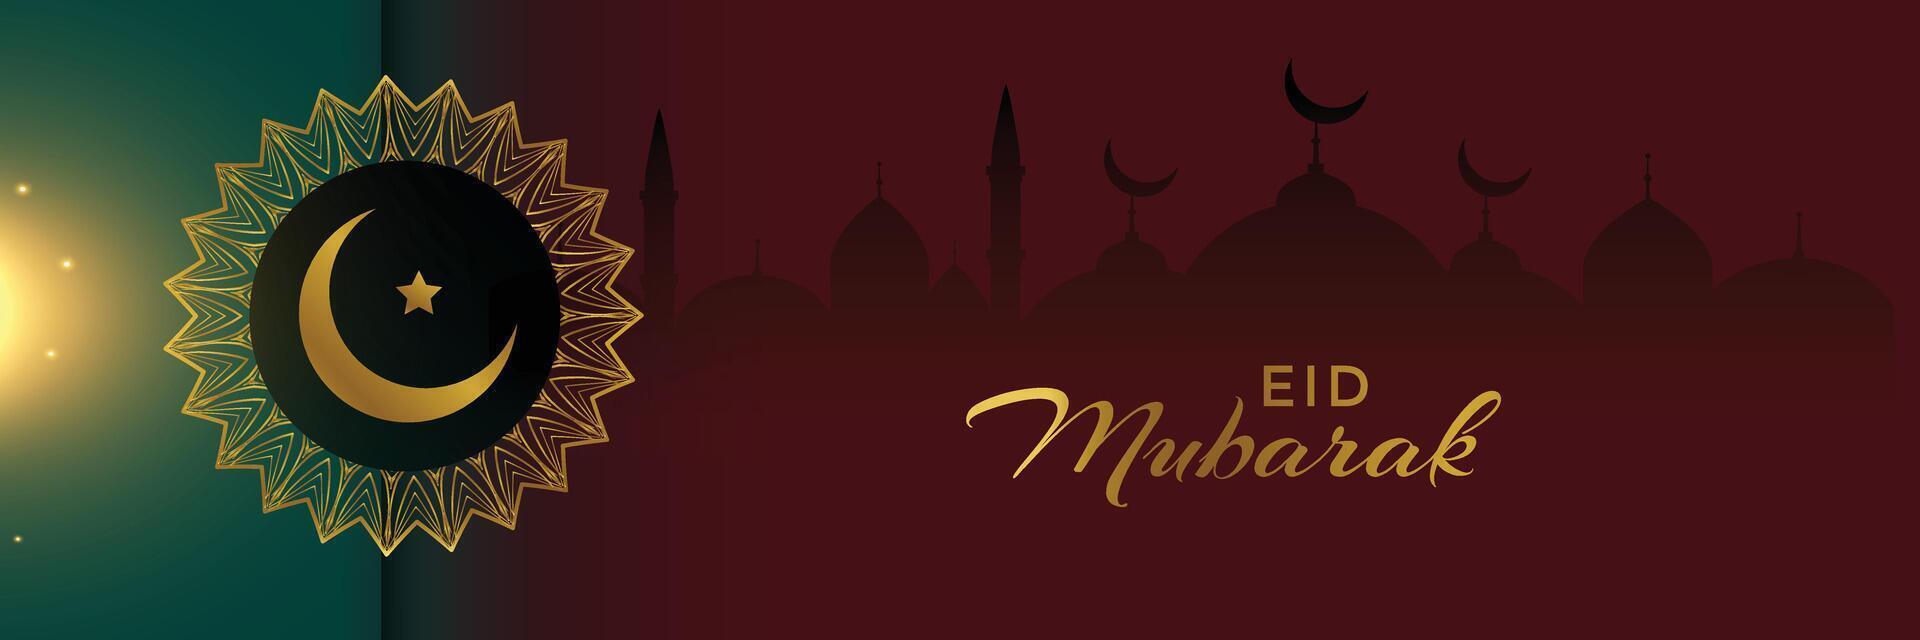 beautiful eid mubarak festival banner design vector